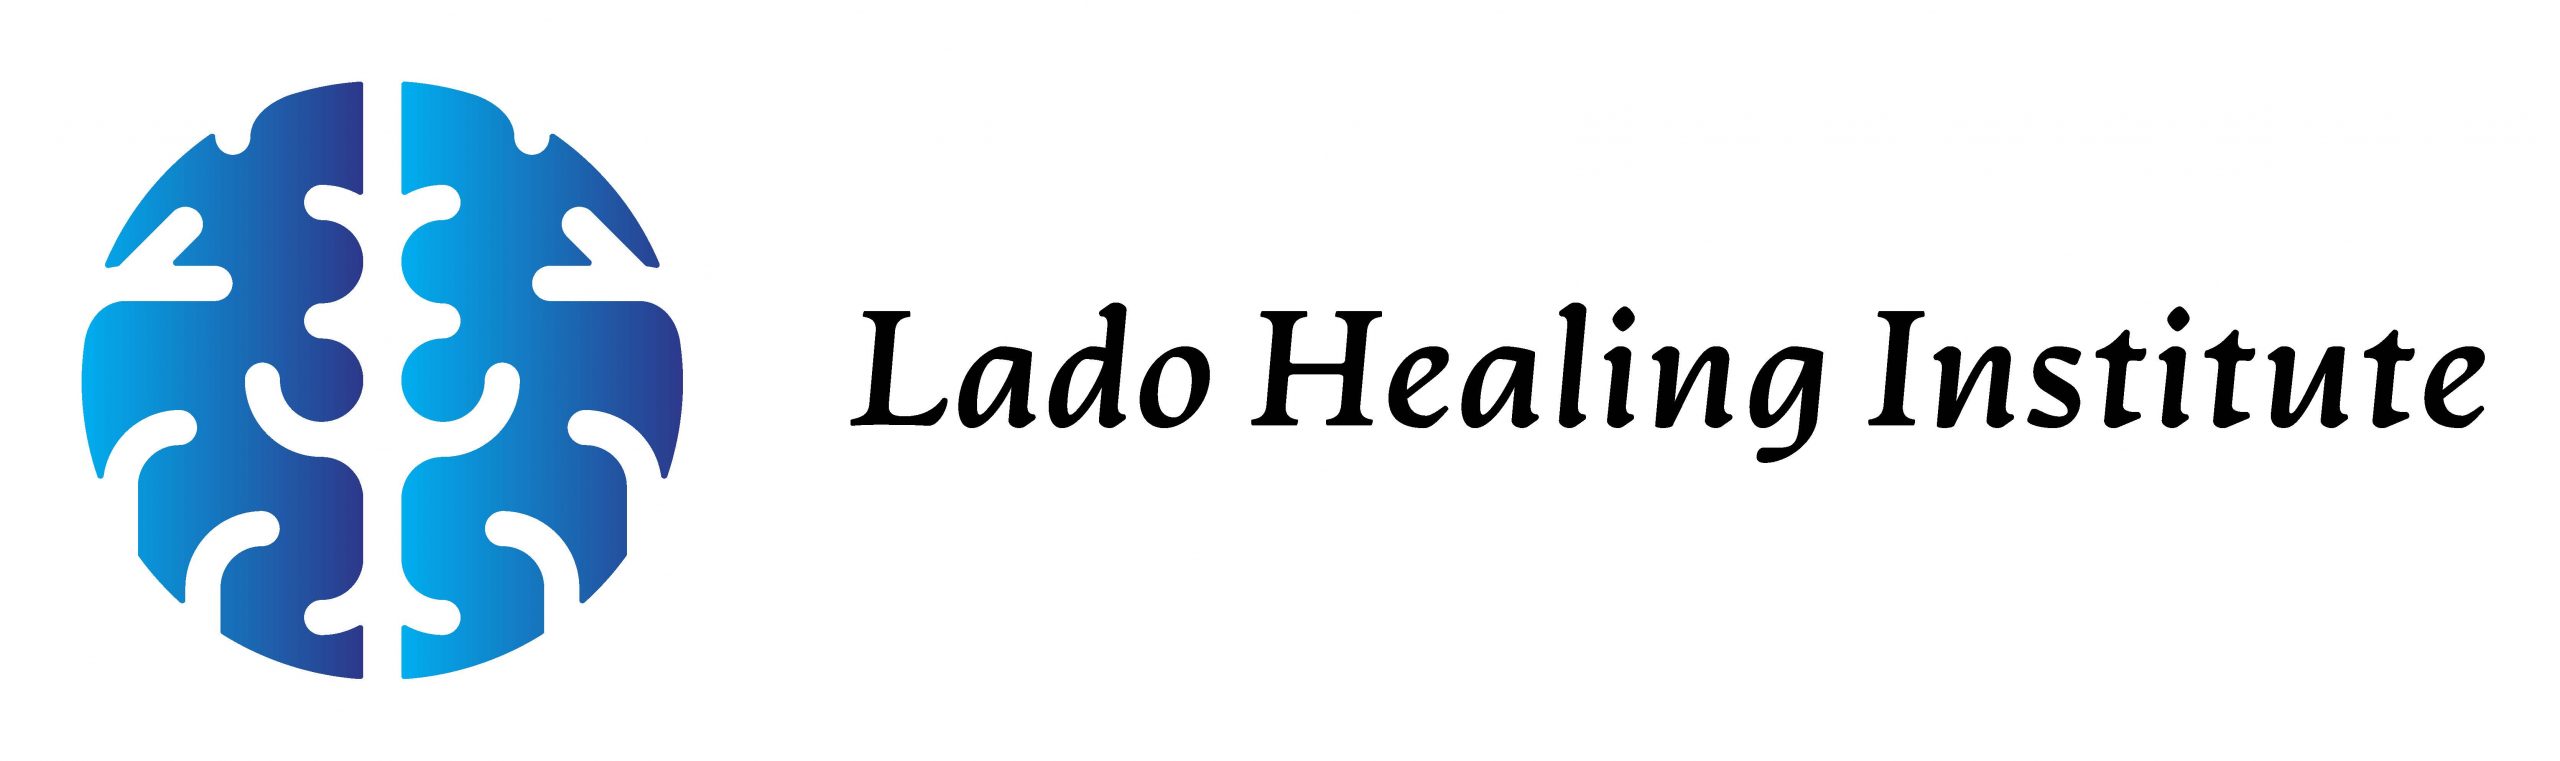 Lado Healing Institute logo